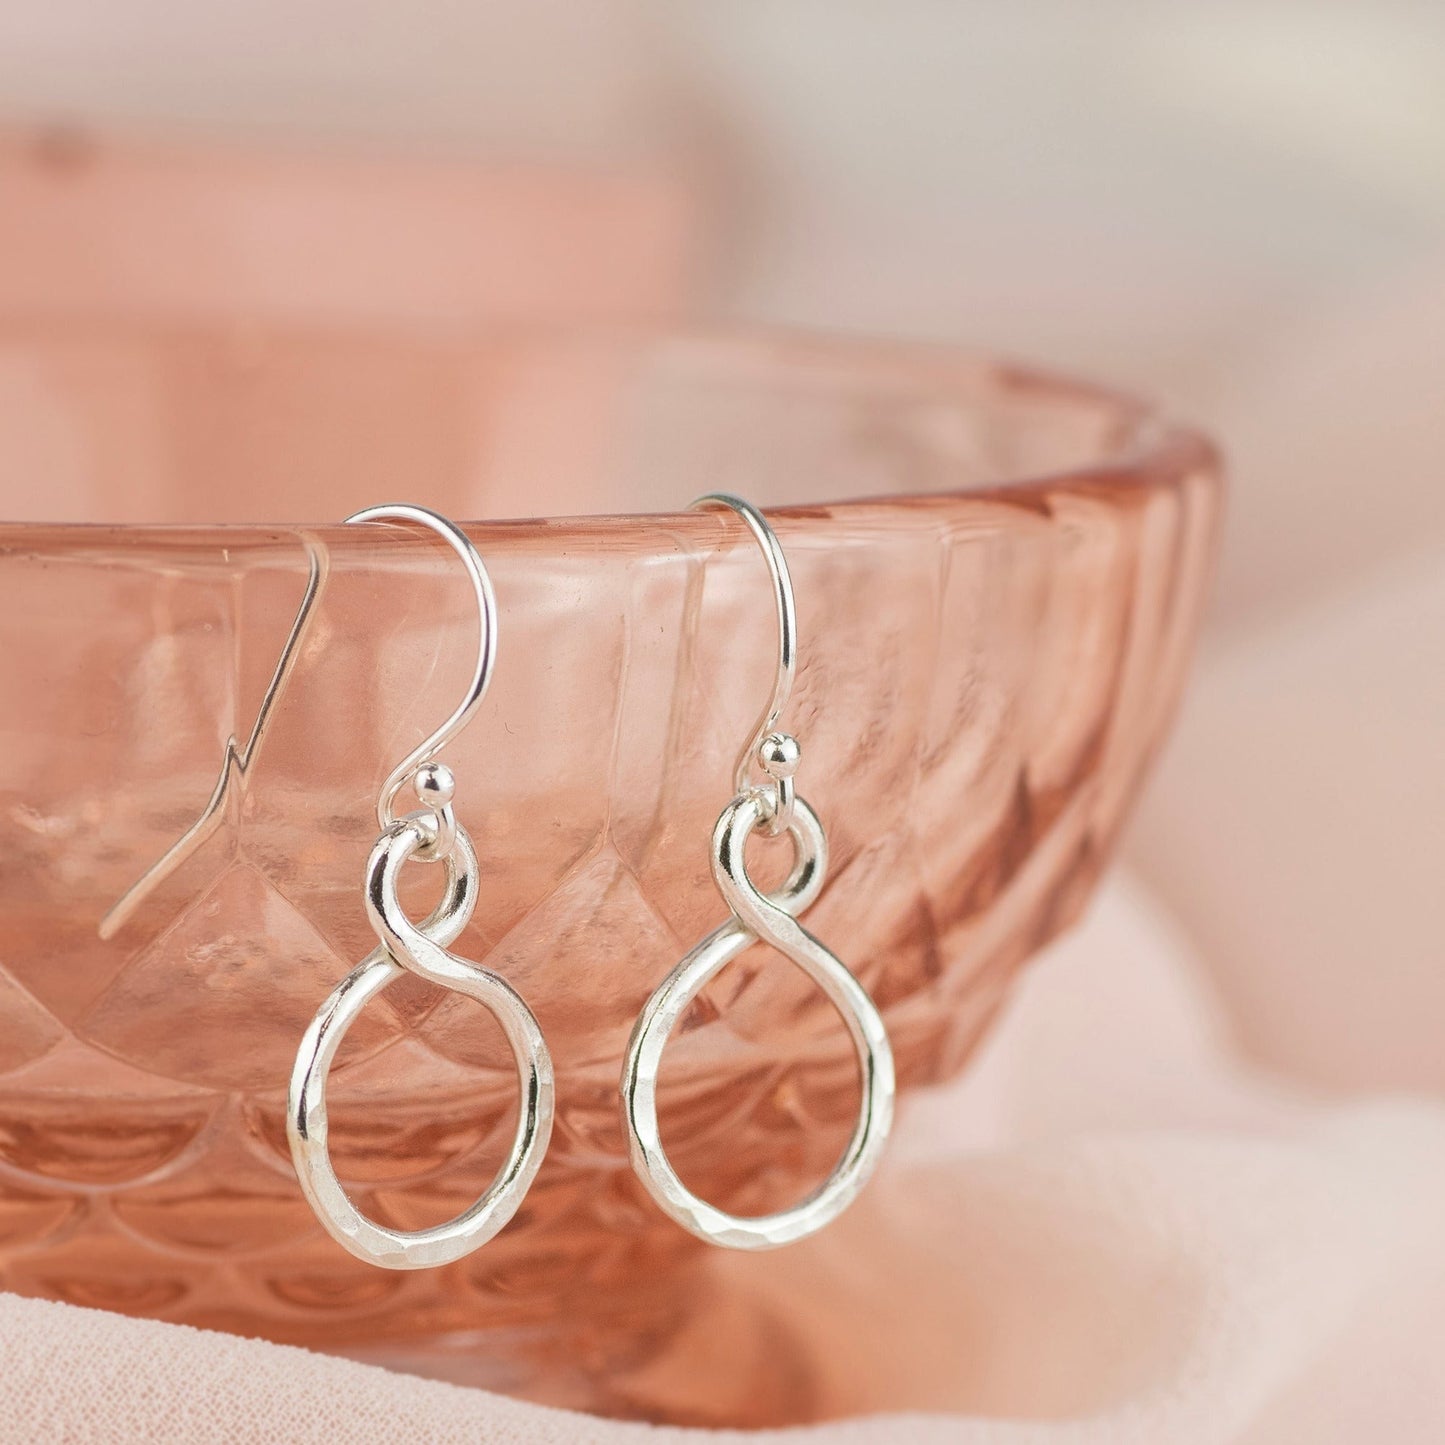 Petite Infinity Earrings - Silver